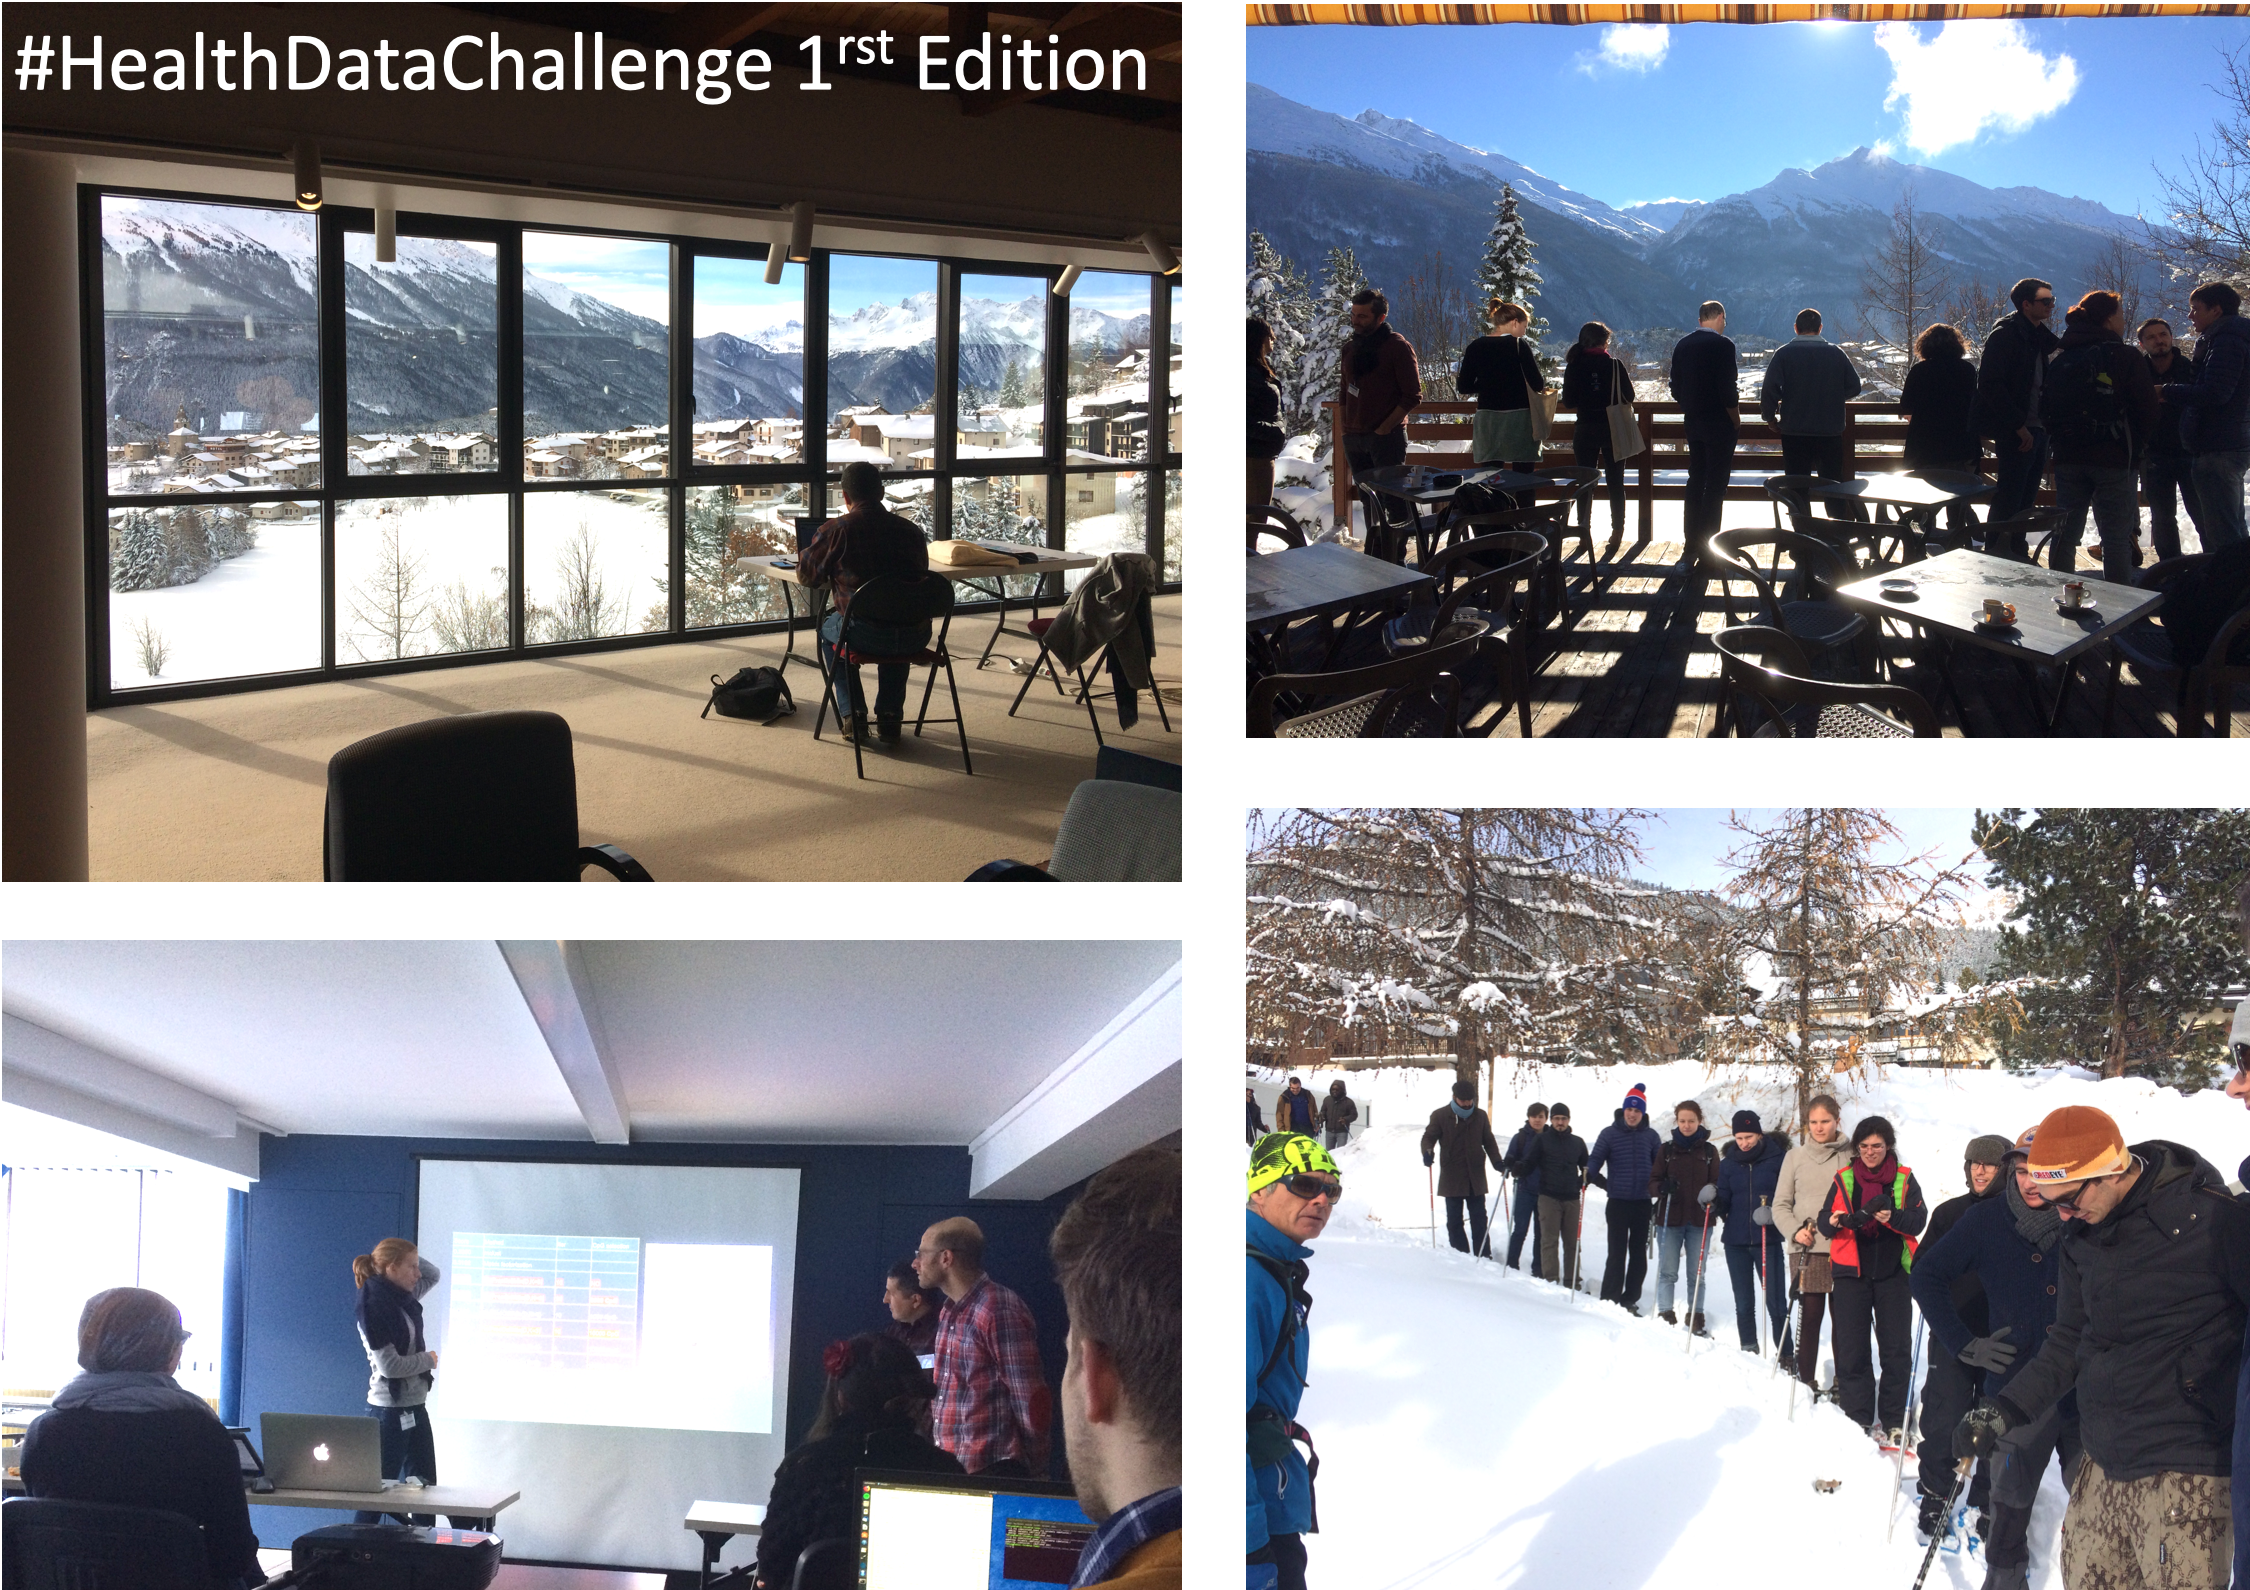 Health data challenge 1st edition, in 2018, at Aussois ski ressort, 40 participants